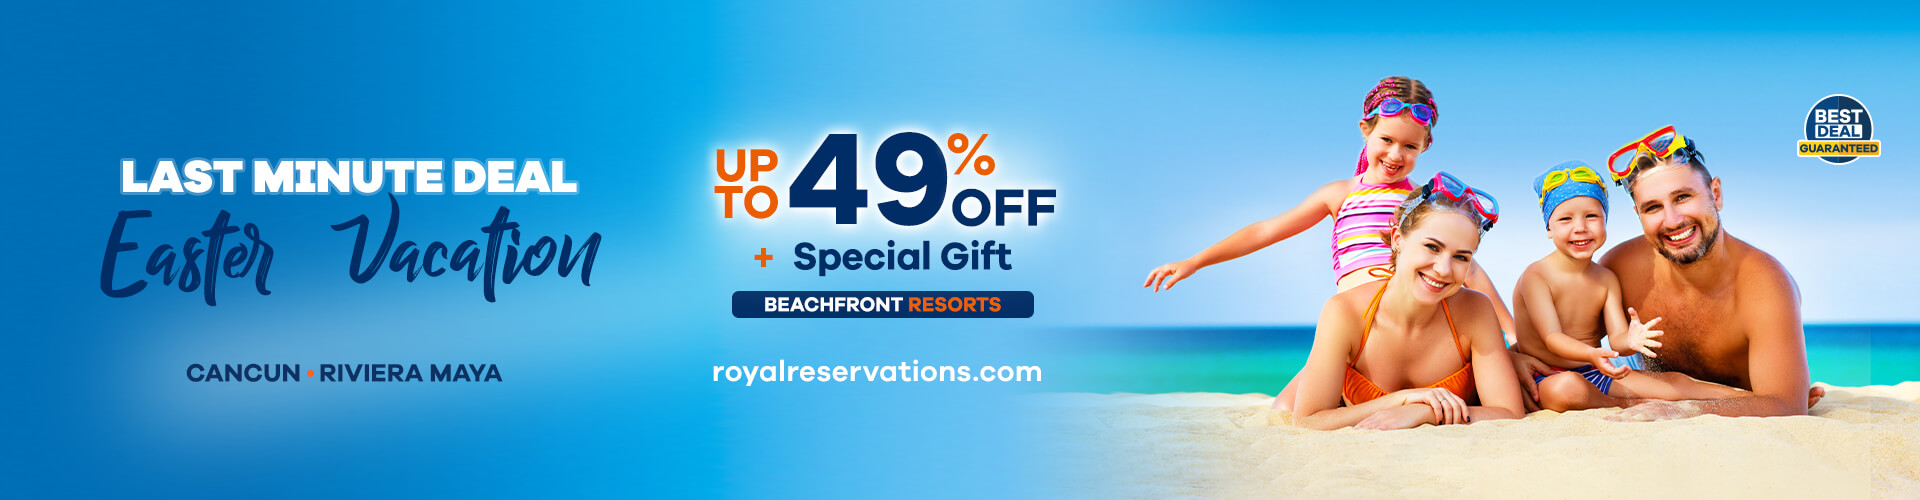 Beach vacations deals in Cancun & Riviera Maya